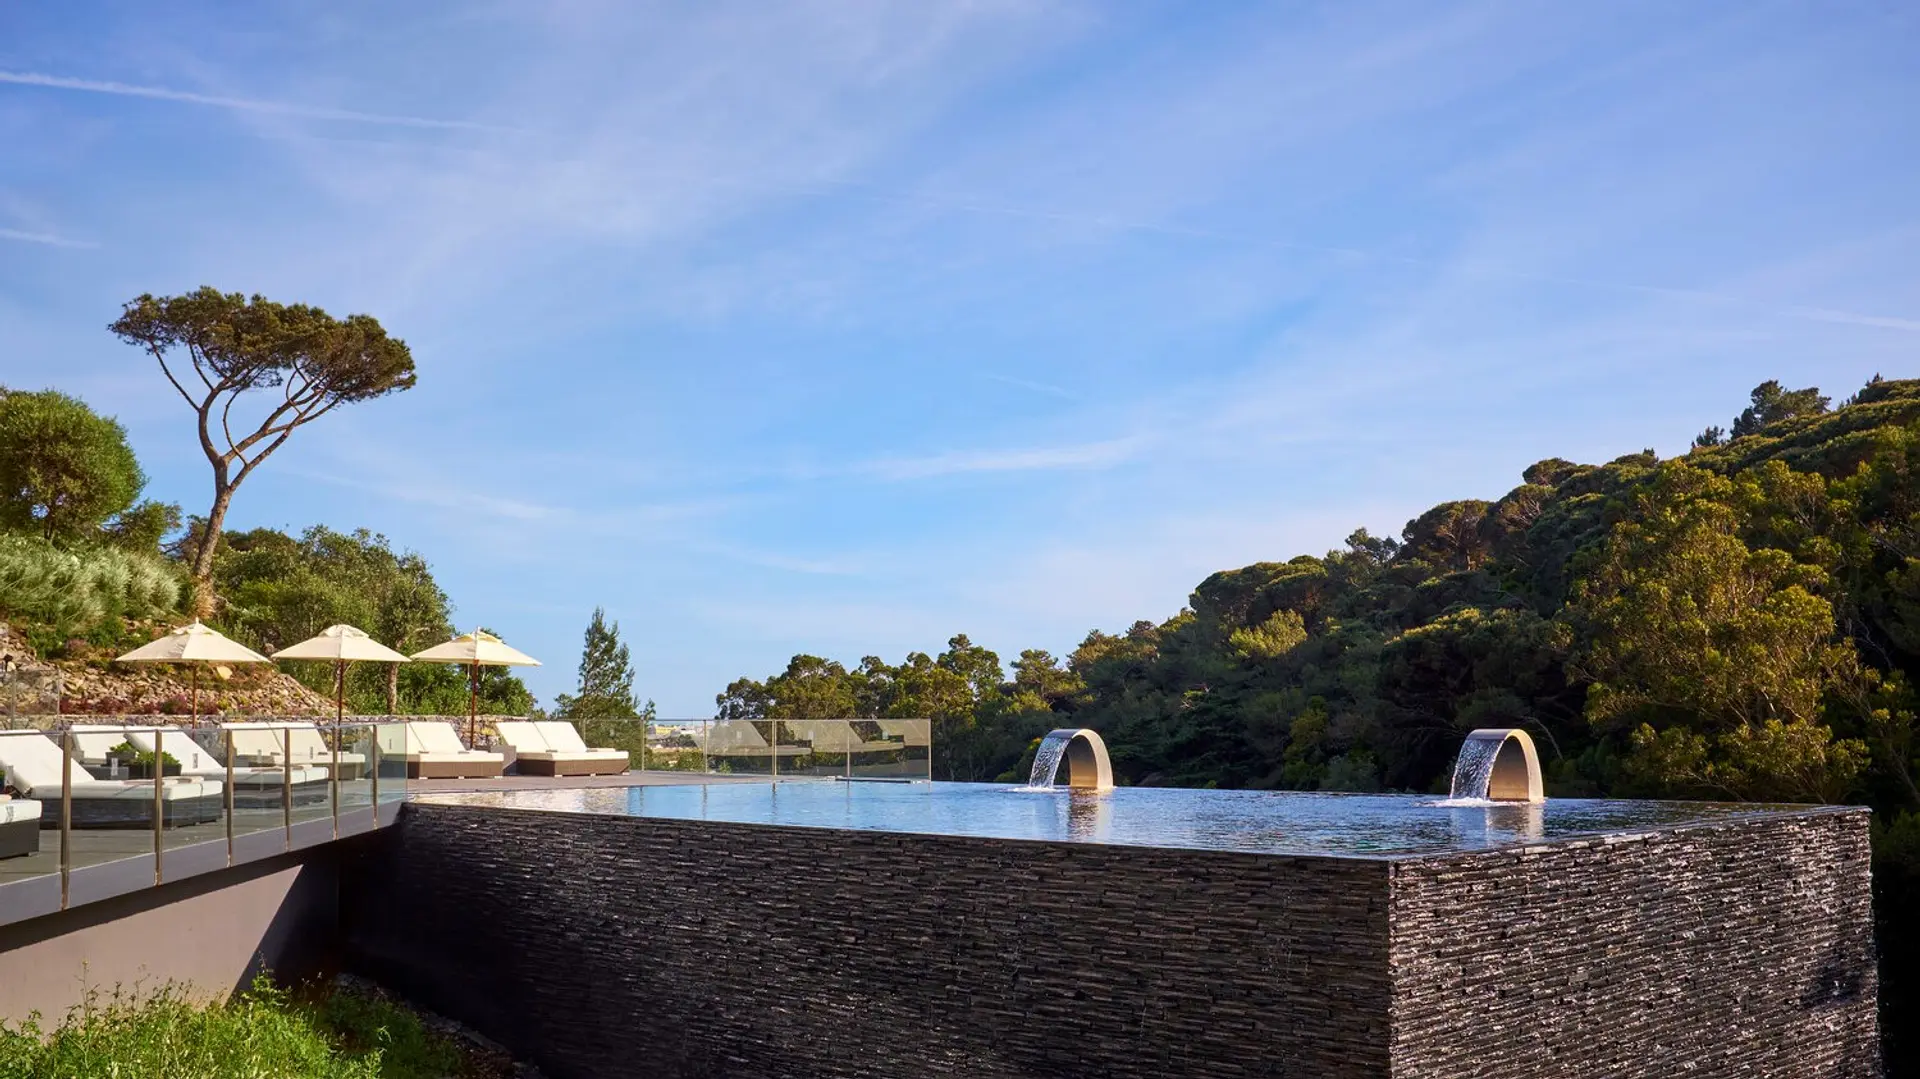 Hotel review Service & Facilities' - Penha Longa Golf Resort - 7